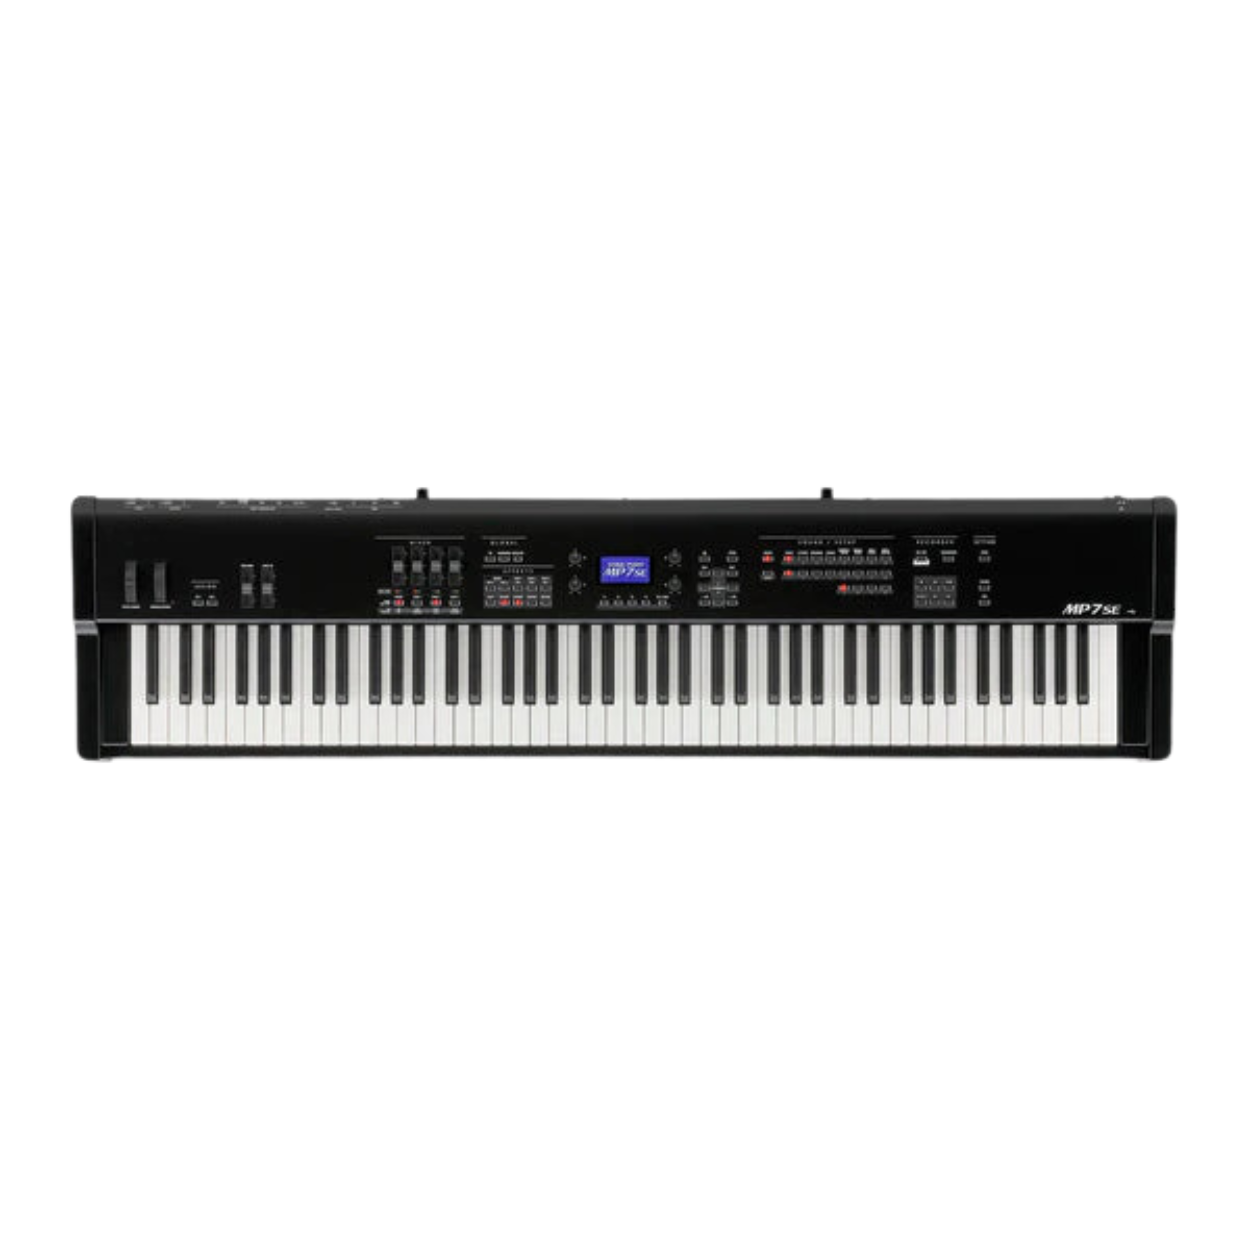 Kawai MP7SE 88-key Professional Stage Piano